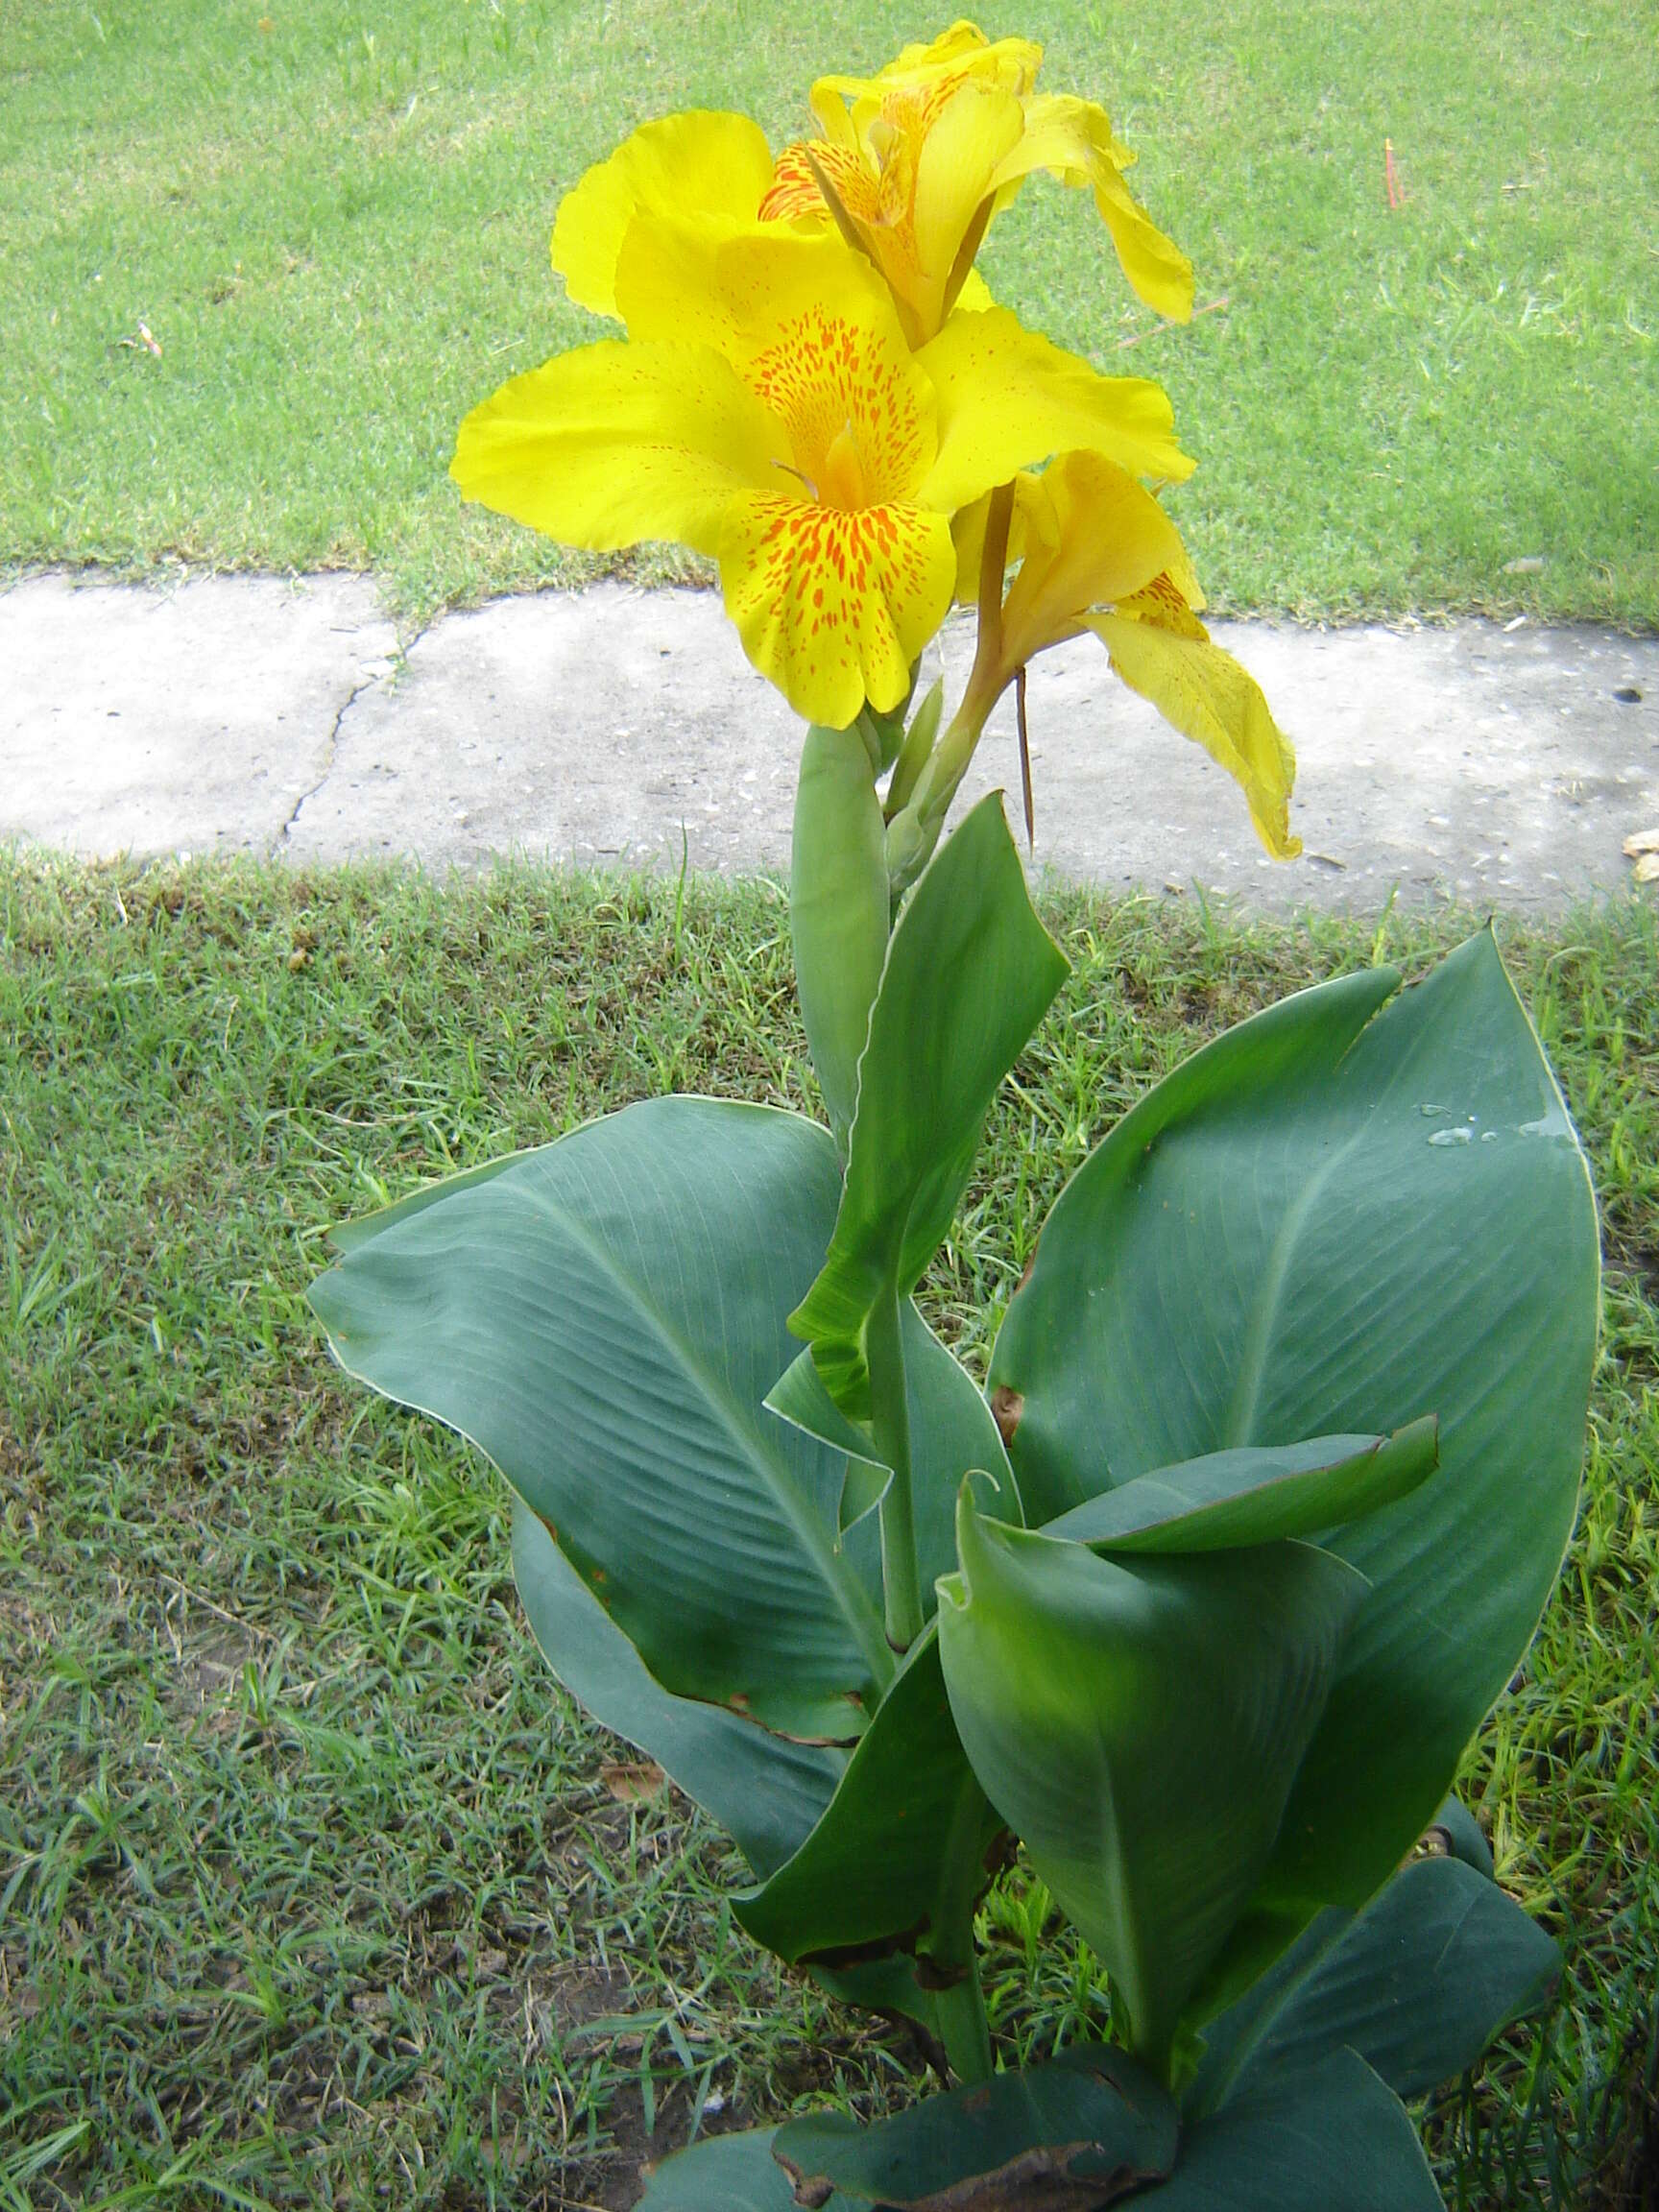 Image of maraca amarilla